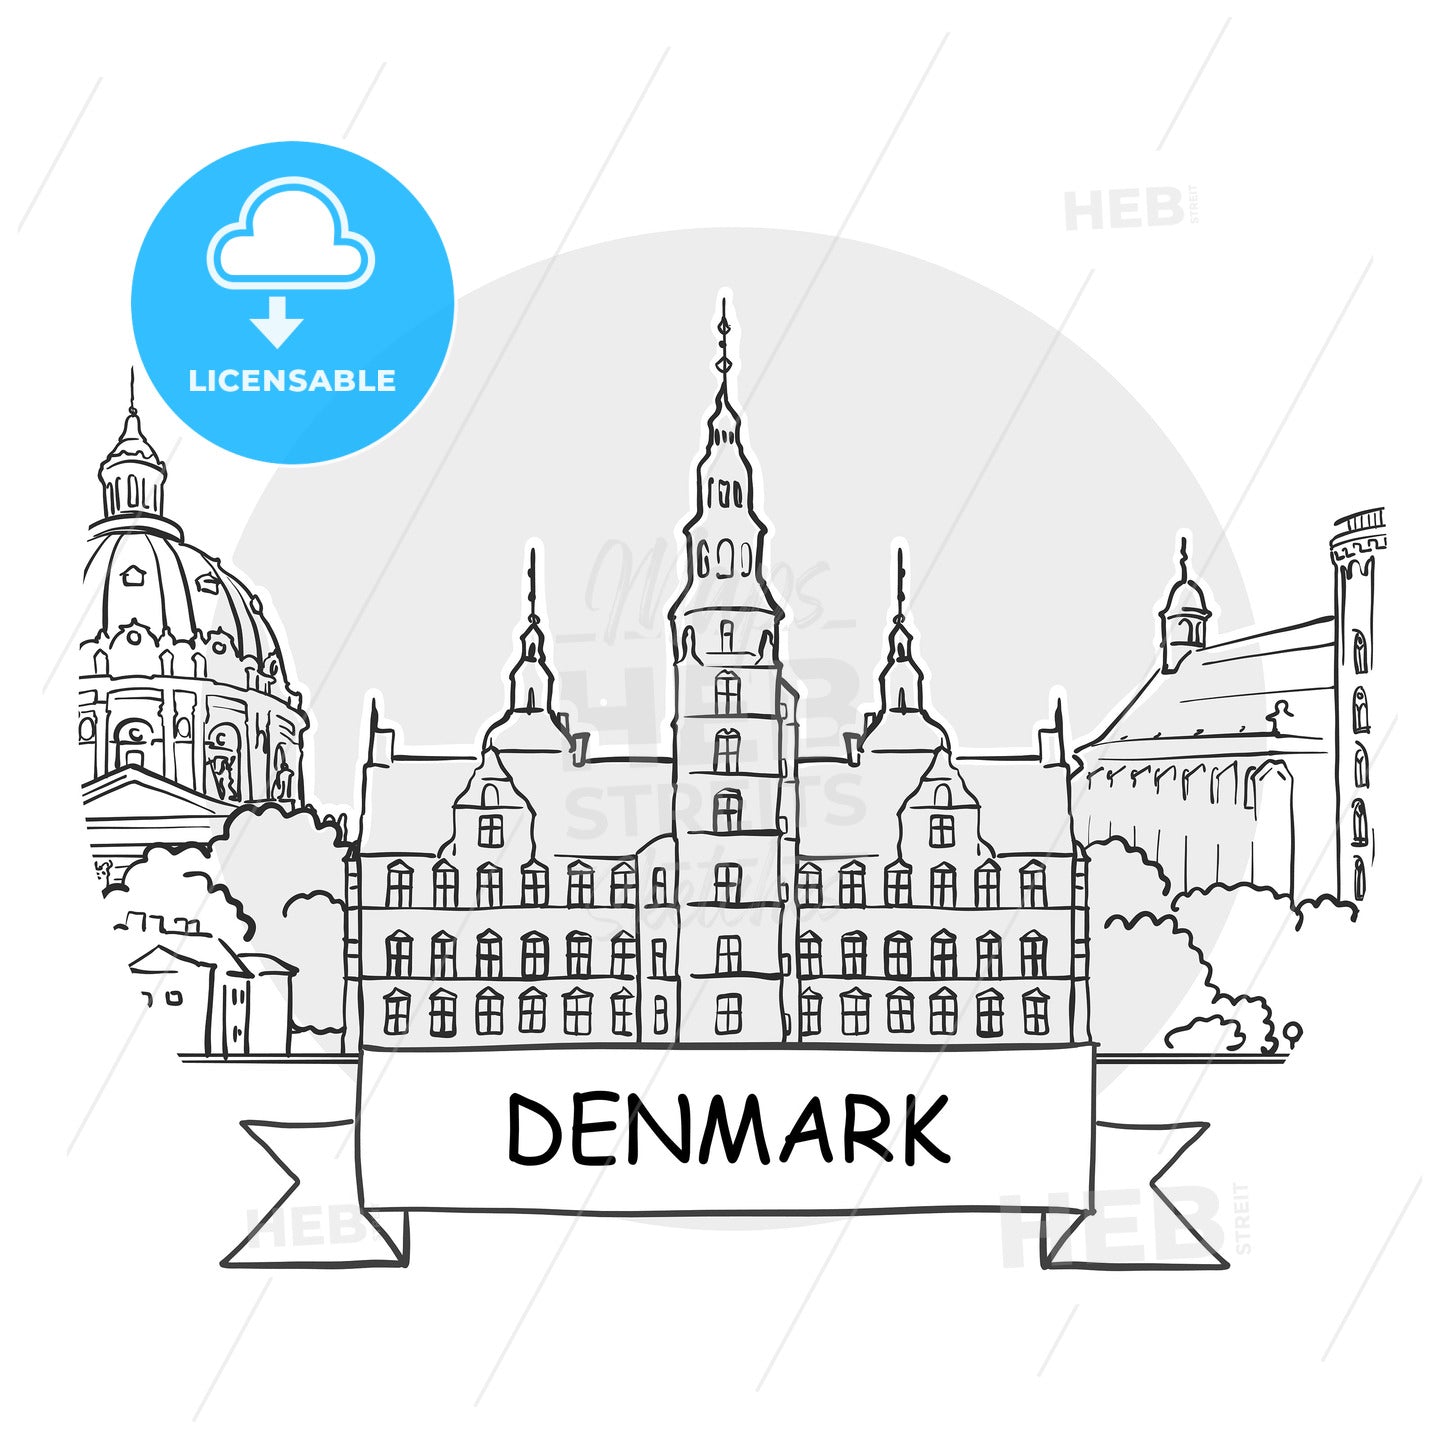 Denmark hand-drawn urban vector sign – instant download